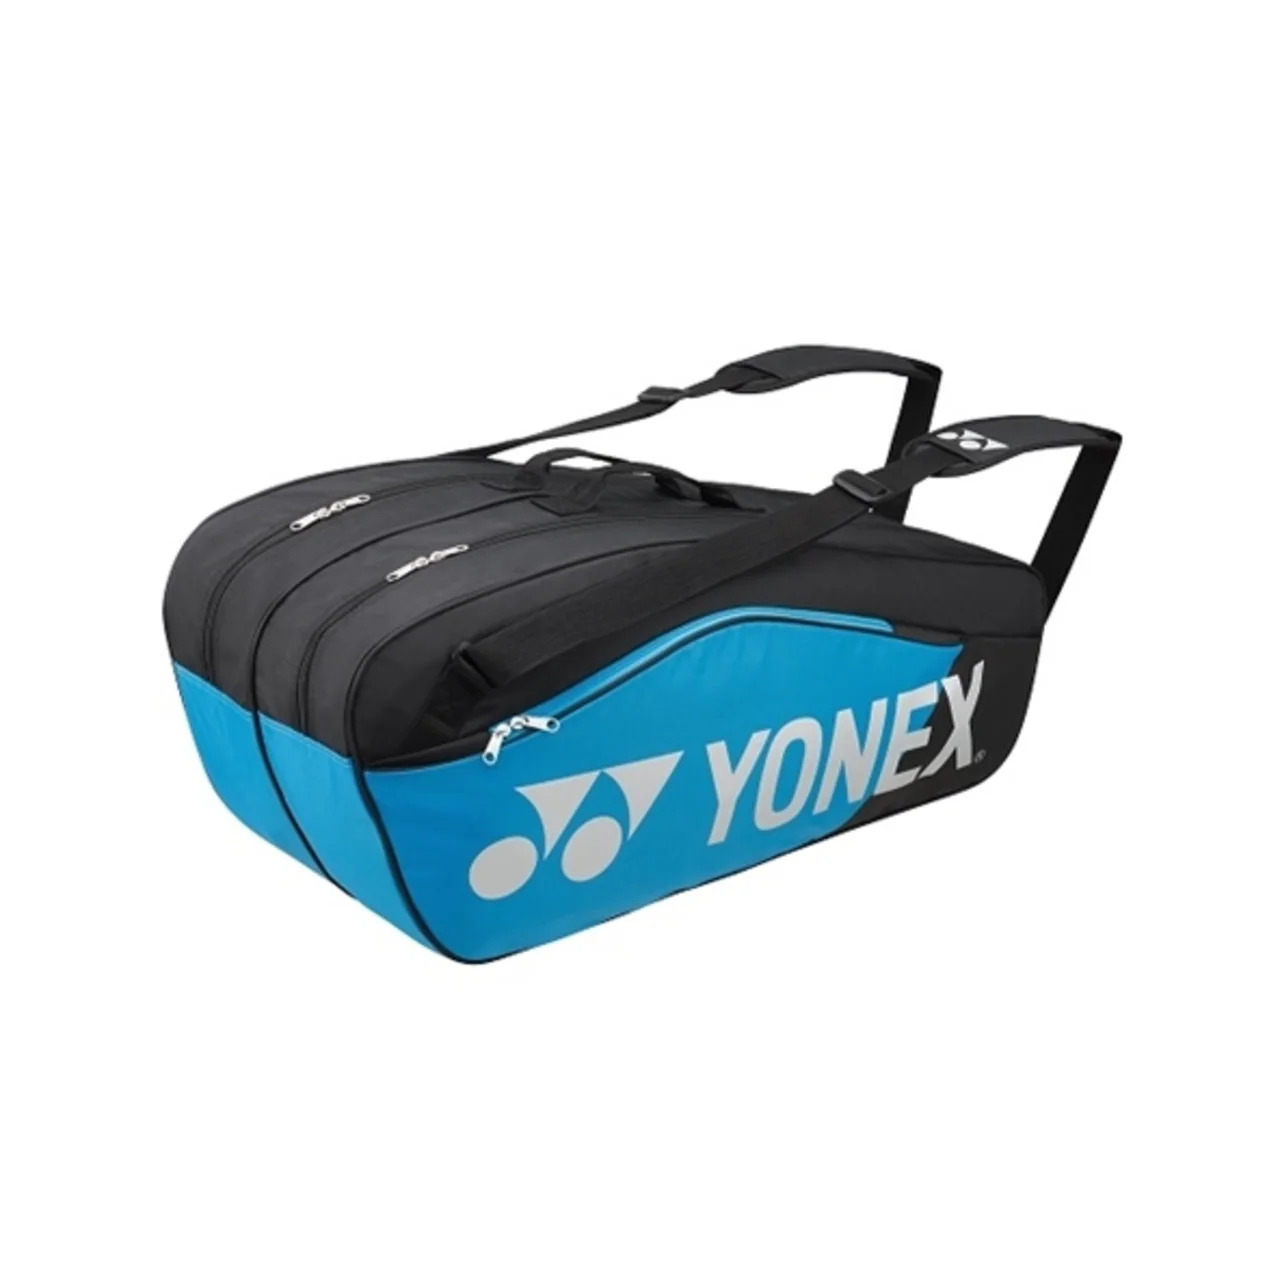 Yonex Pro Bag x6 Replica Infinity Blue 2018